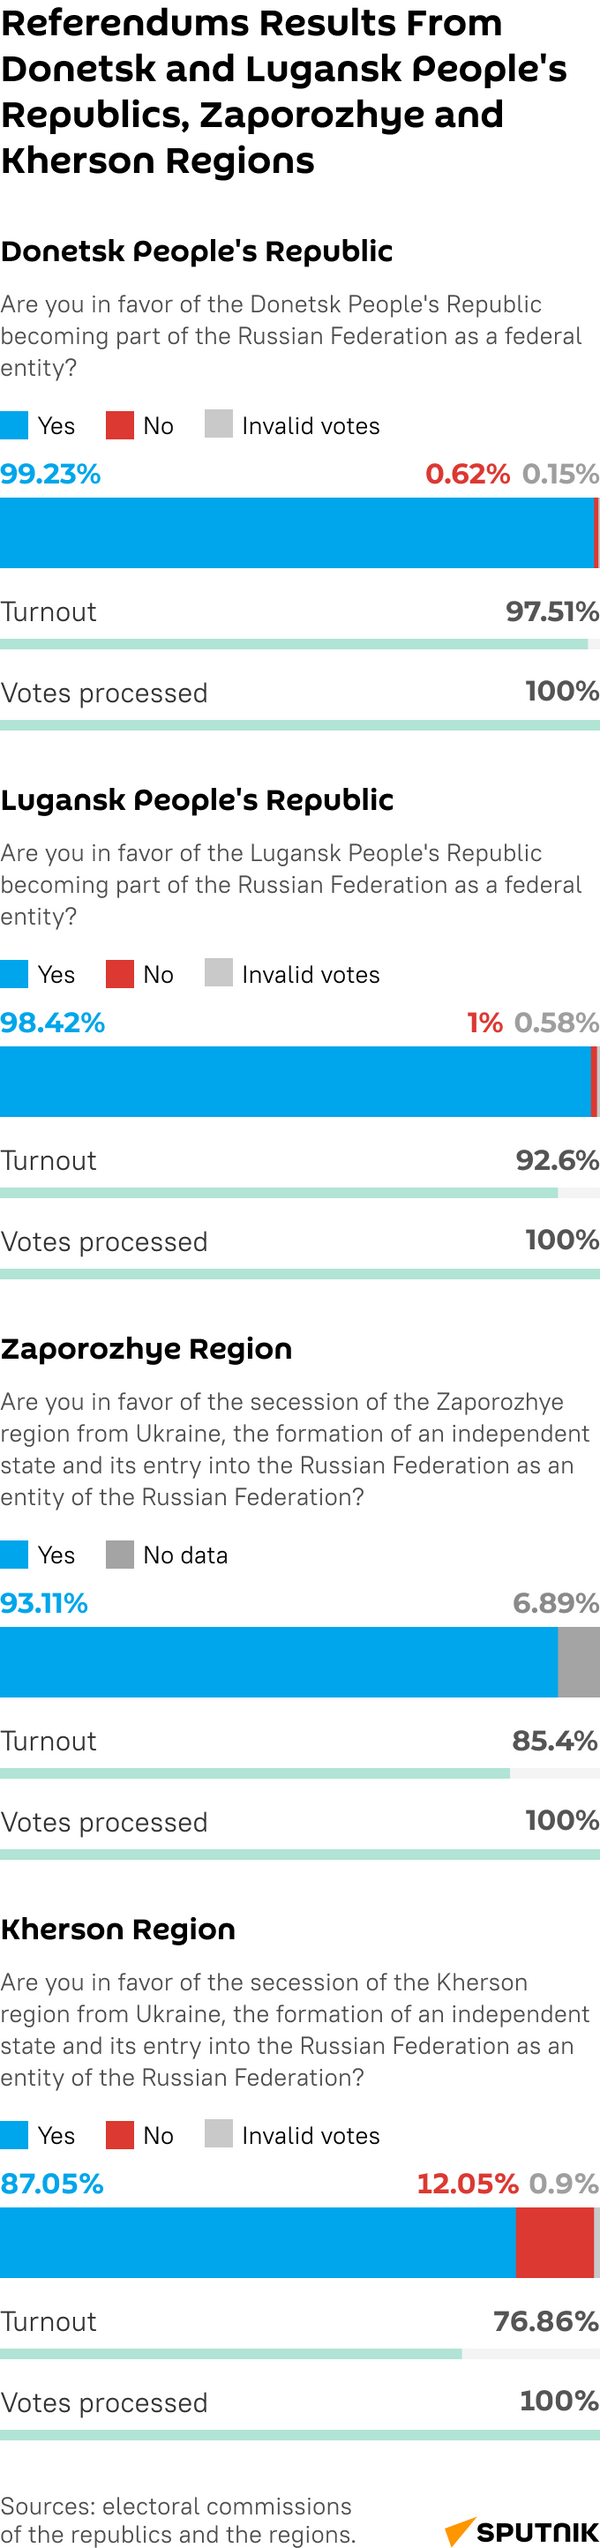 Referendum Results From Donetsk and Lugansk People's Republics, Zaporozhye and Kherson Regions - Sputnik International